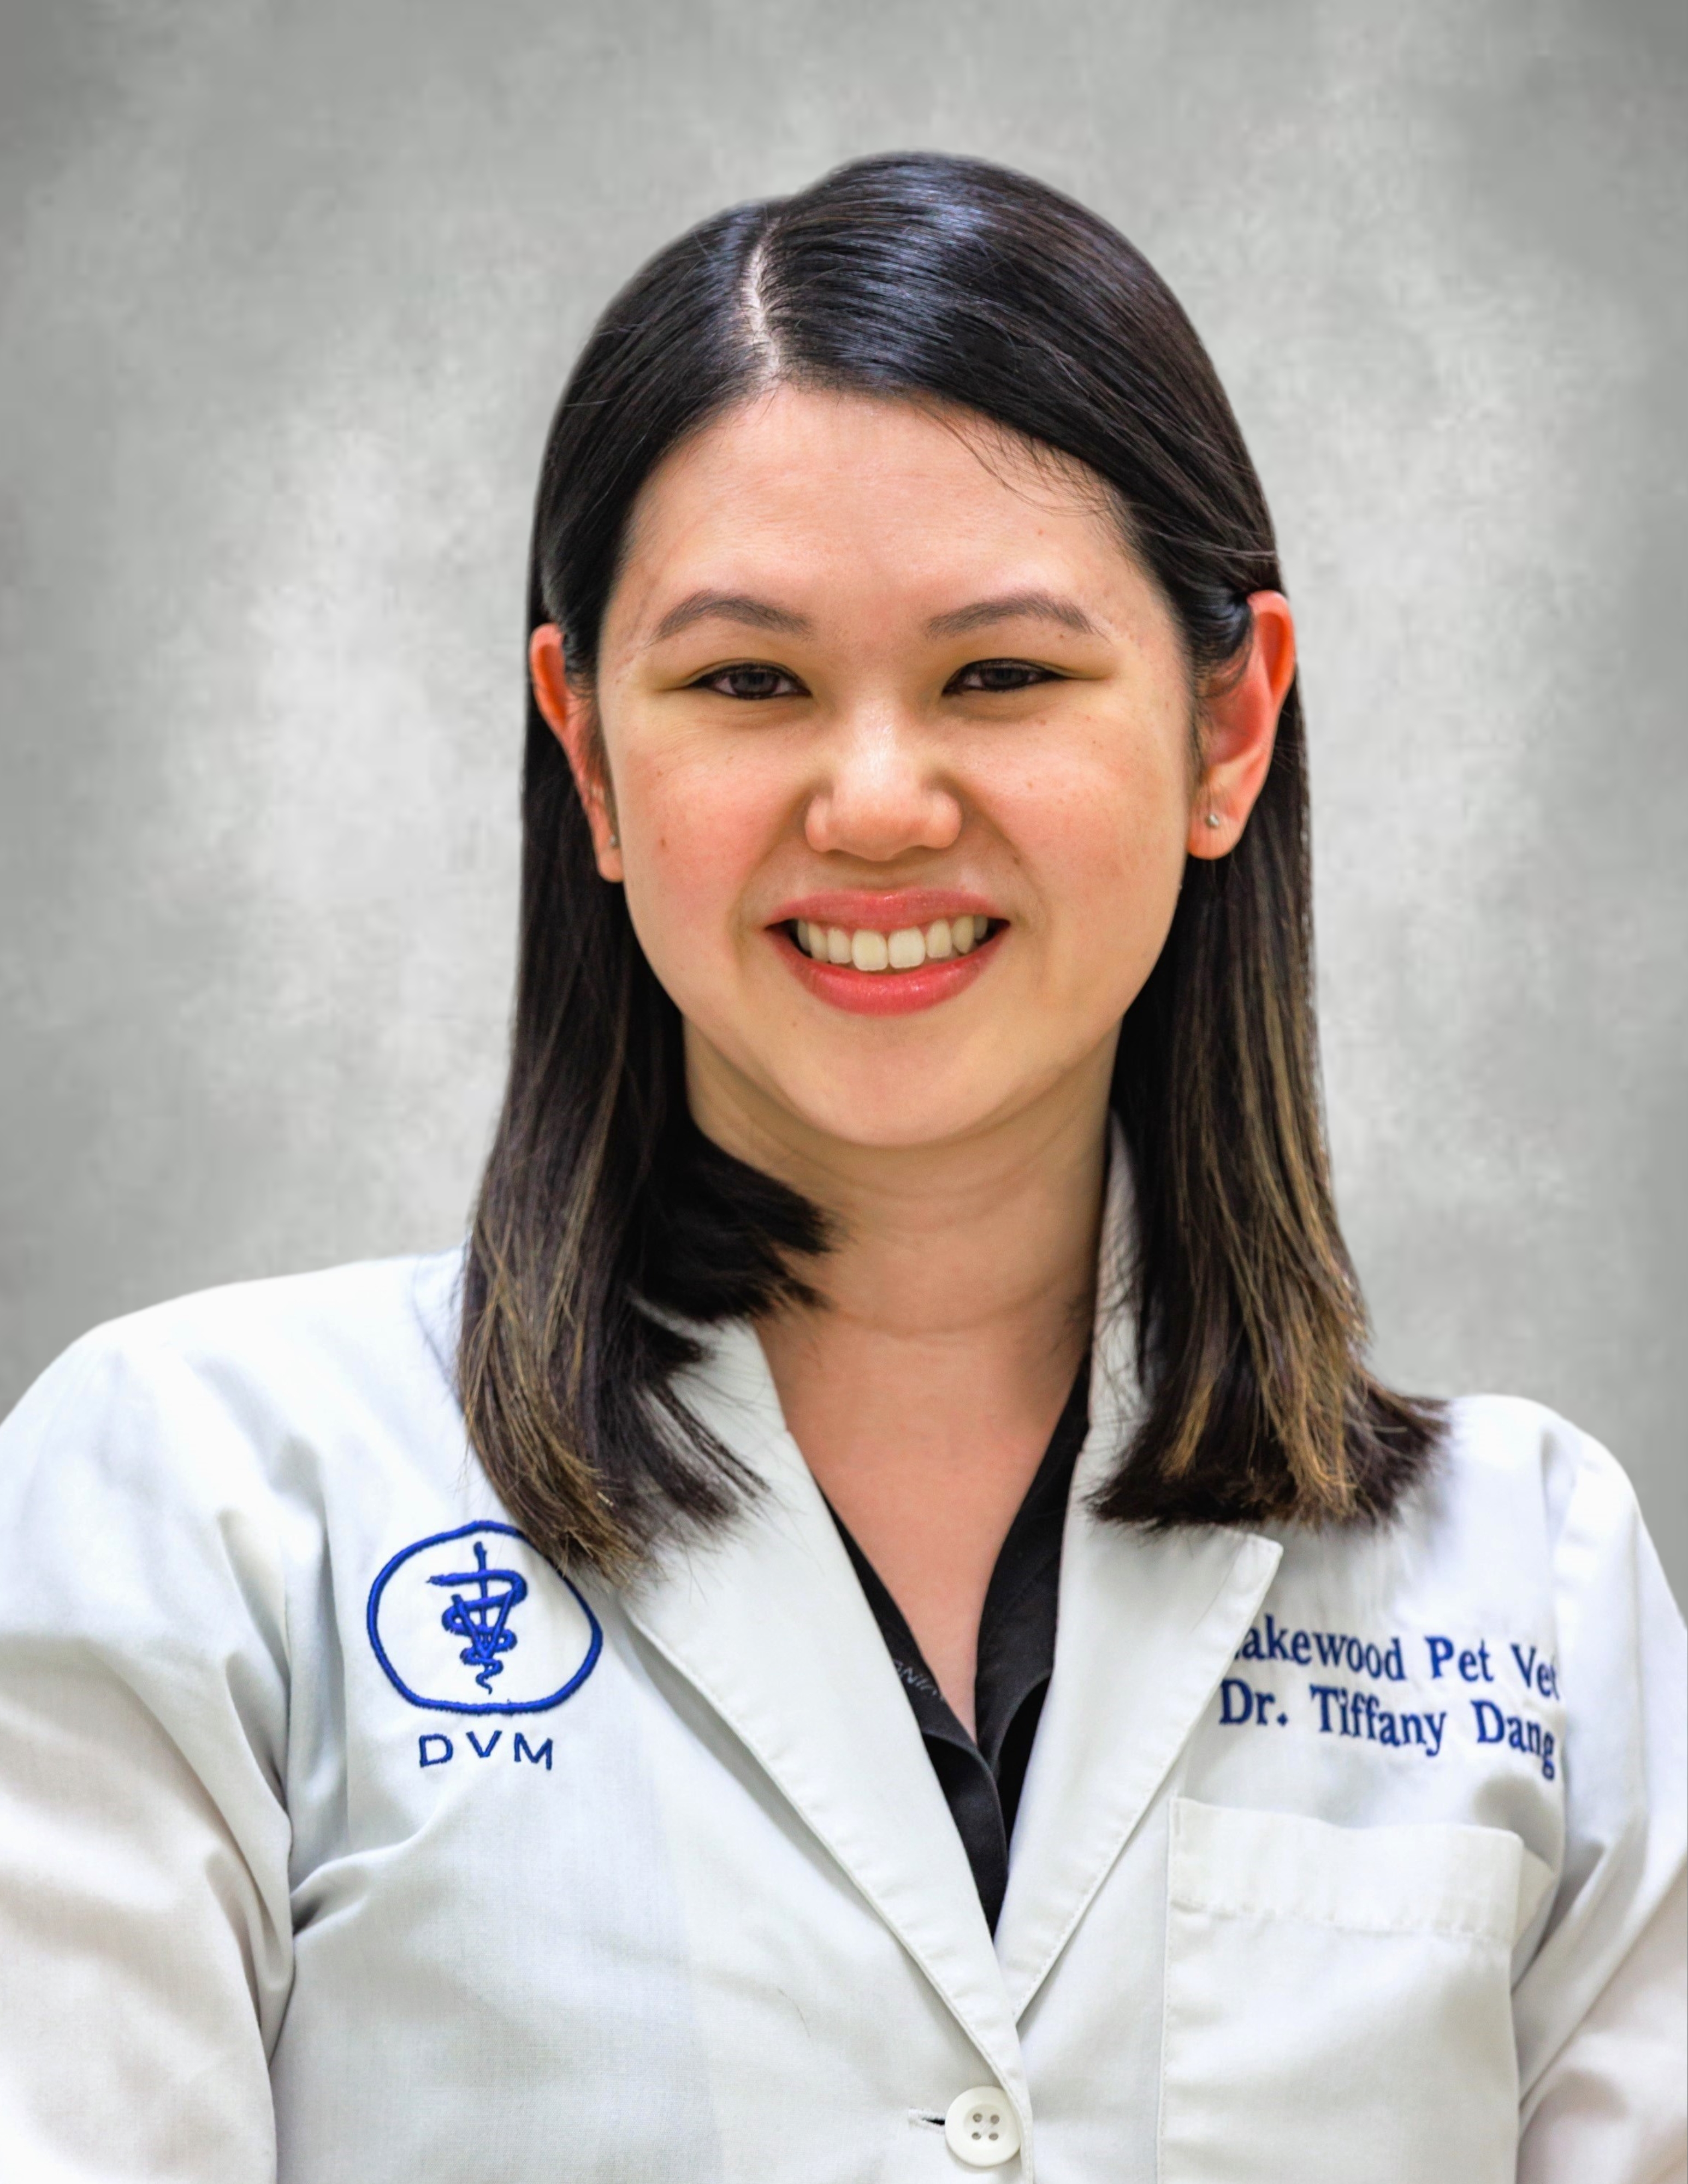 Dr. Dang smiling in her lab coat